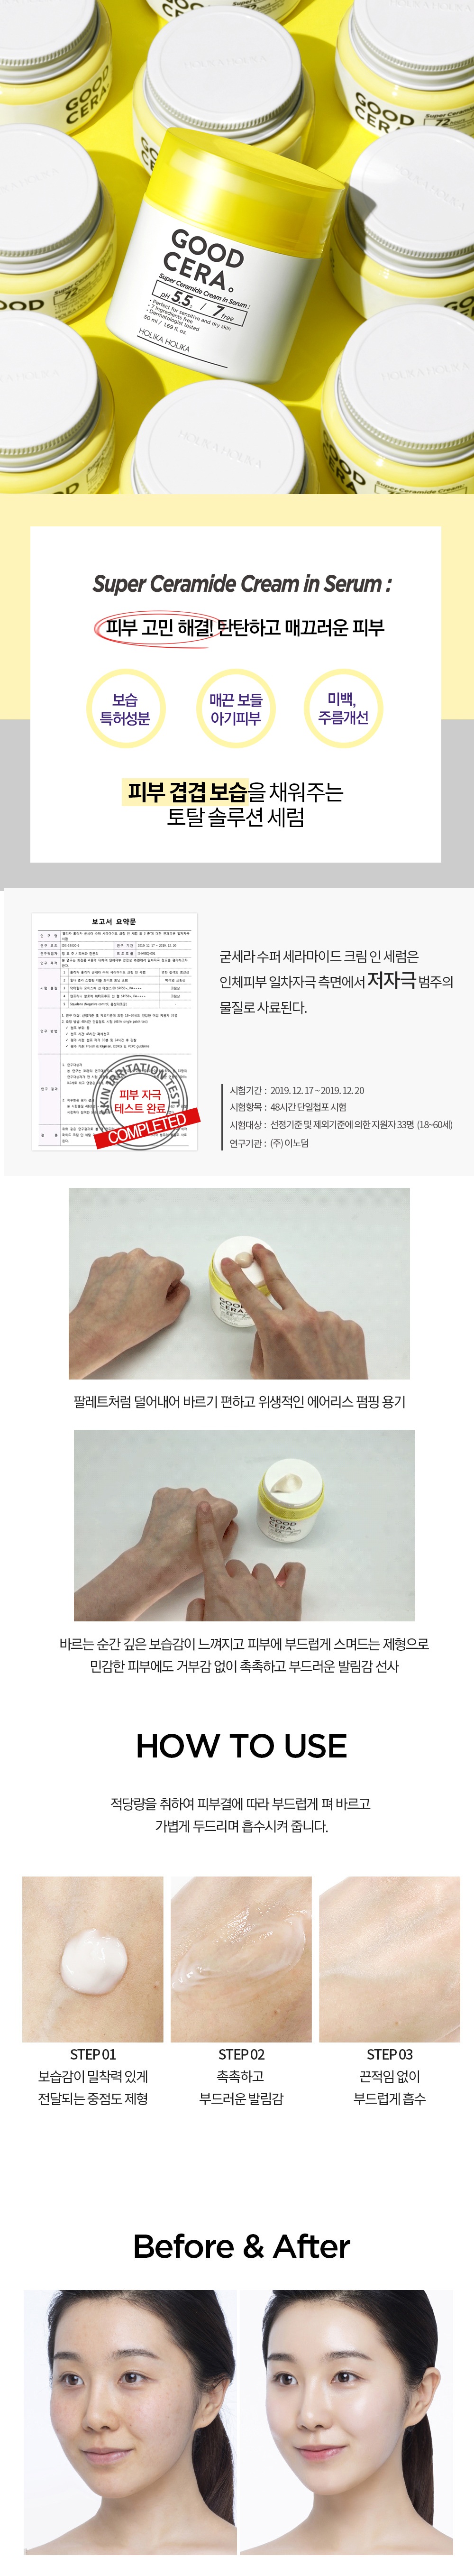 Holika Holika Good Cera Super Ceramide Cream in Serum korean cosmetic skincare product online shop malaysia China hong kong2